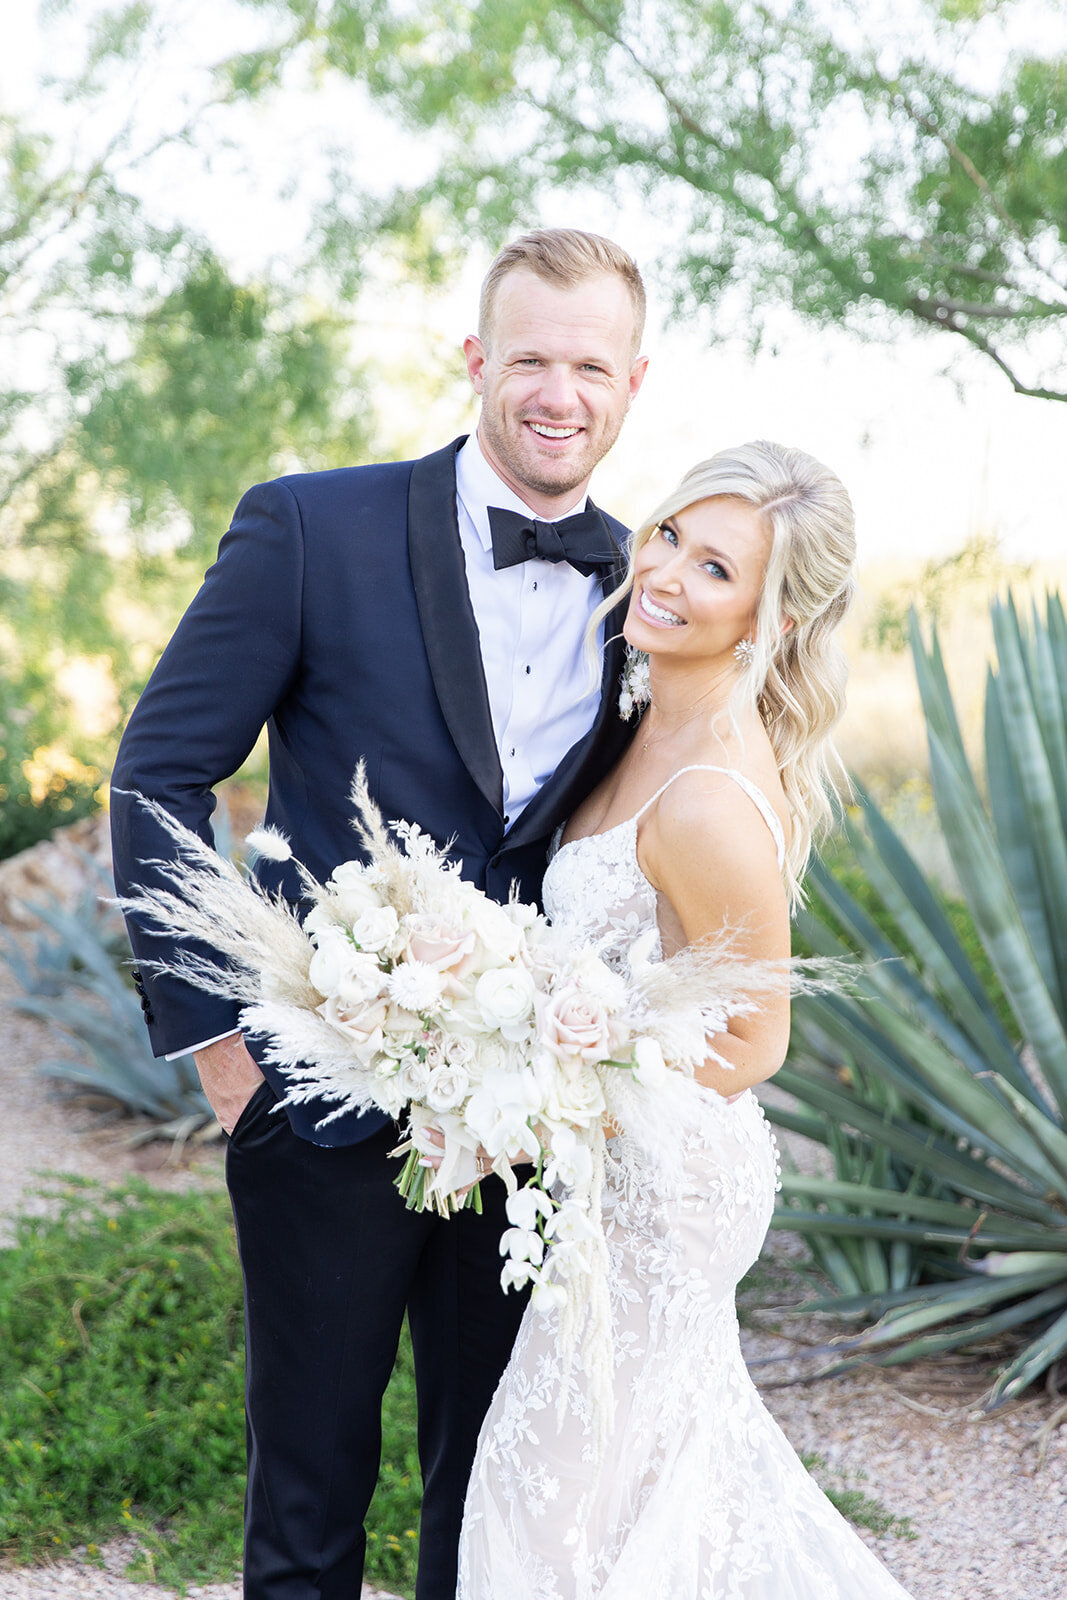 Karlie Colleen Photography - Ashley & Grant Wedding - The Paseo - Phoenix Arizona-684